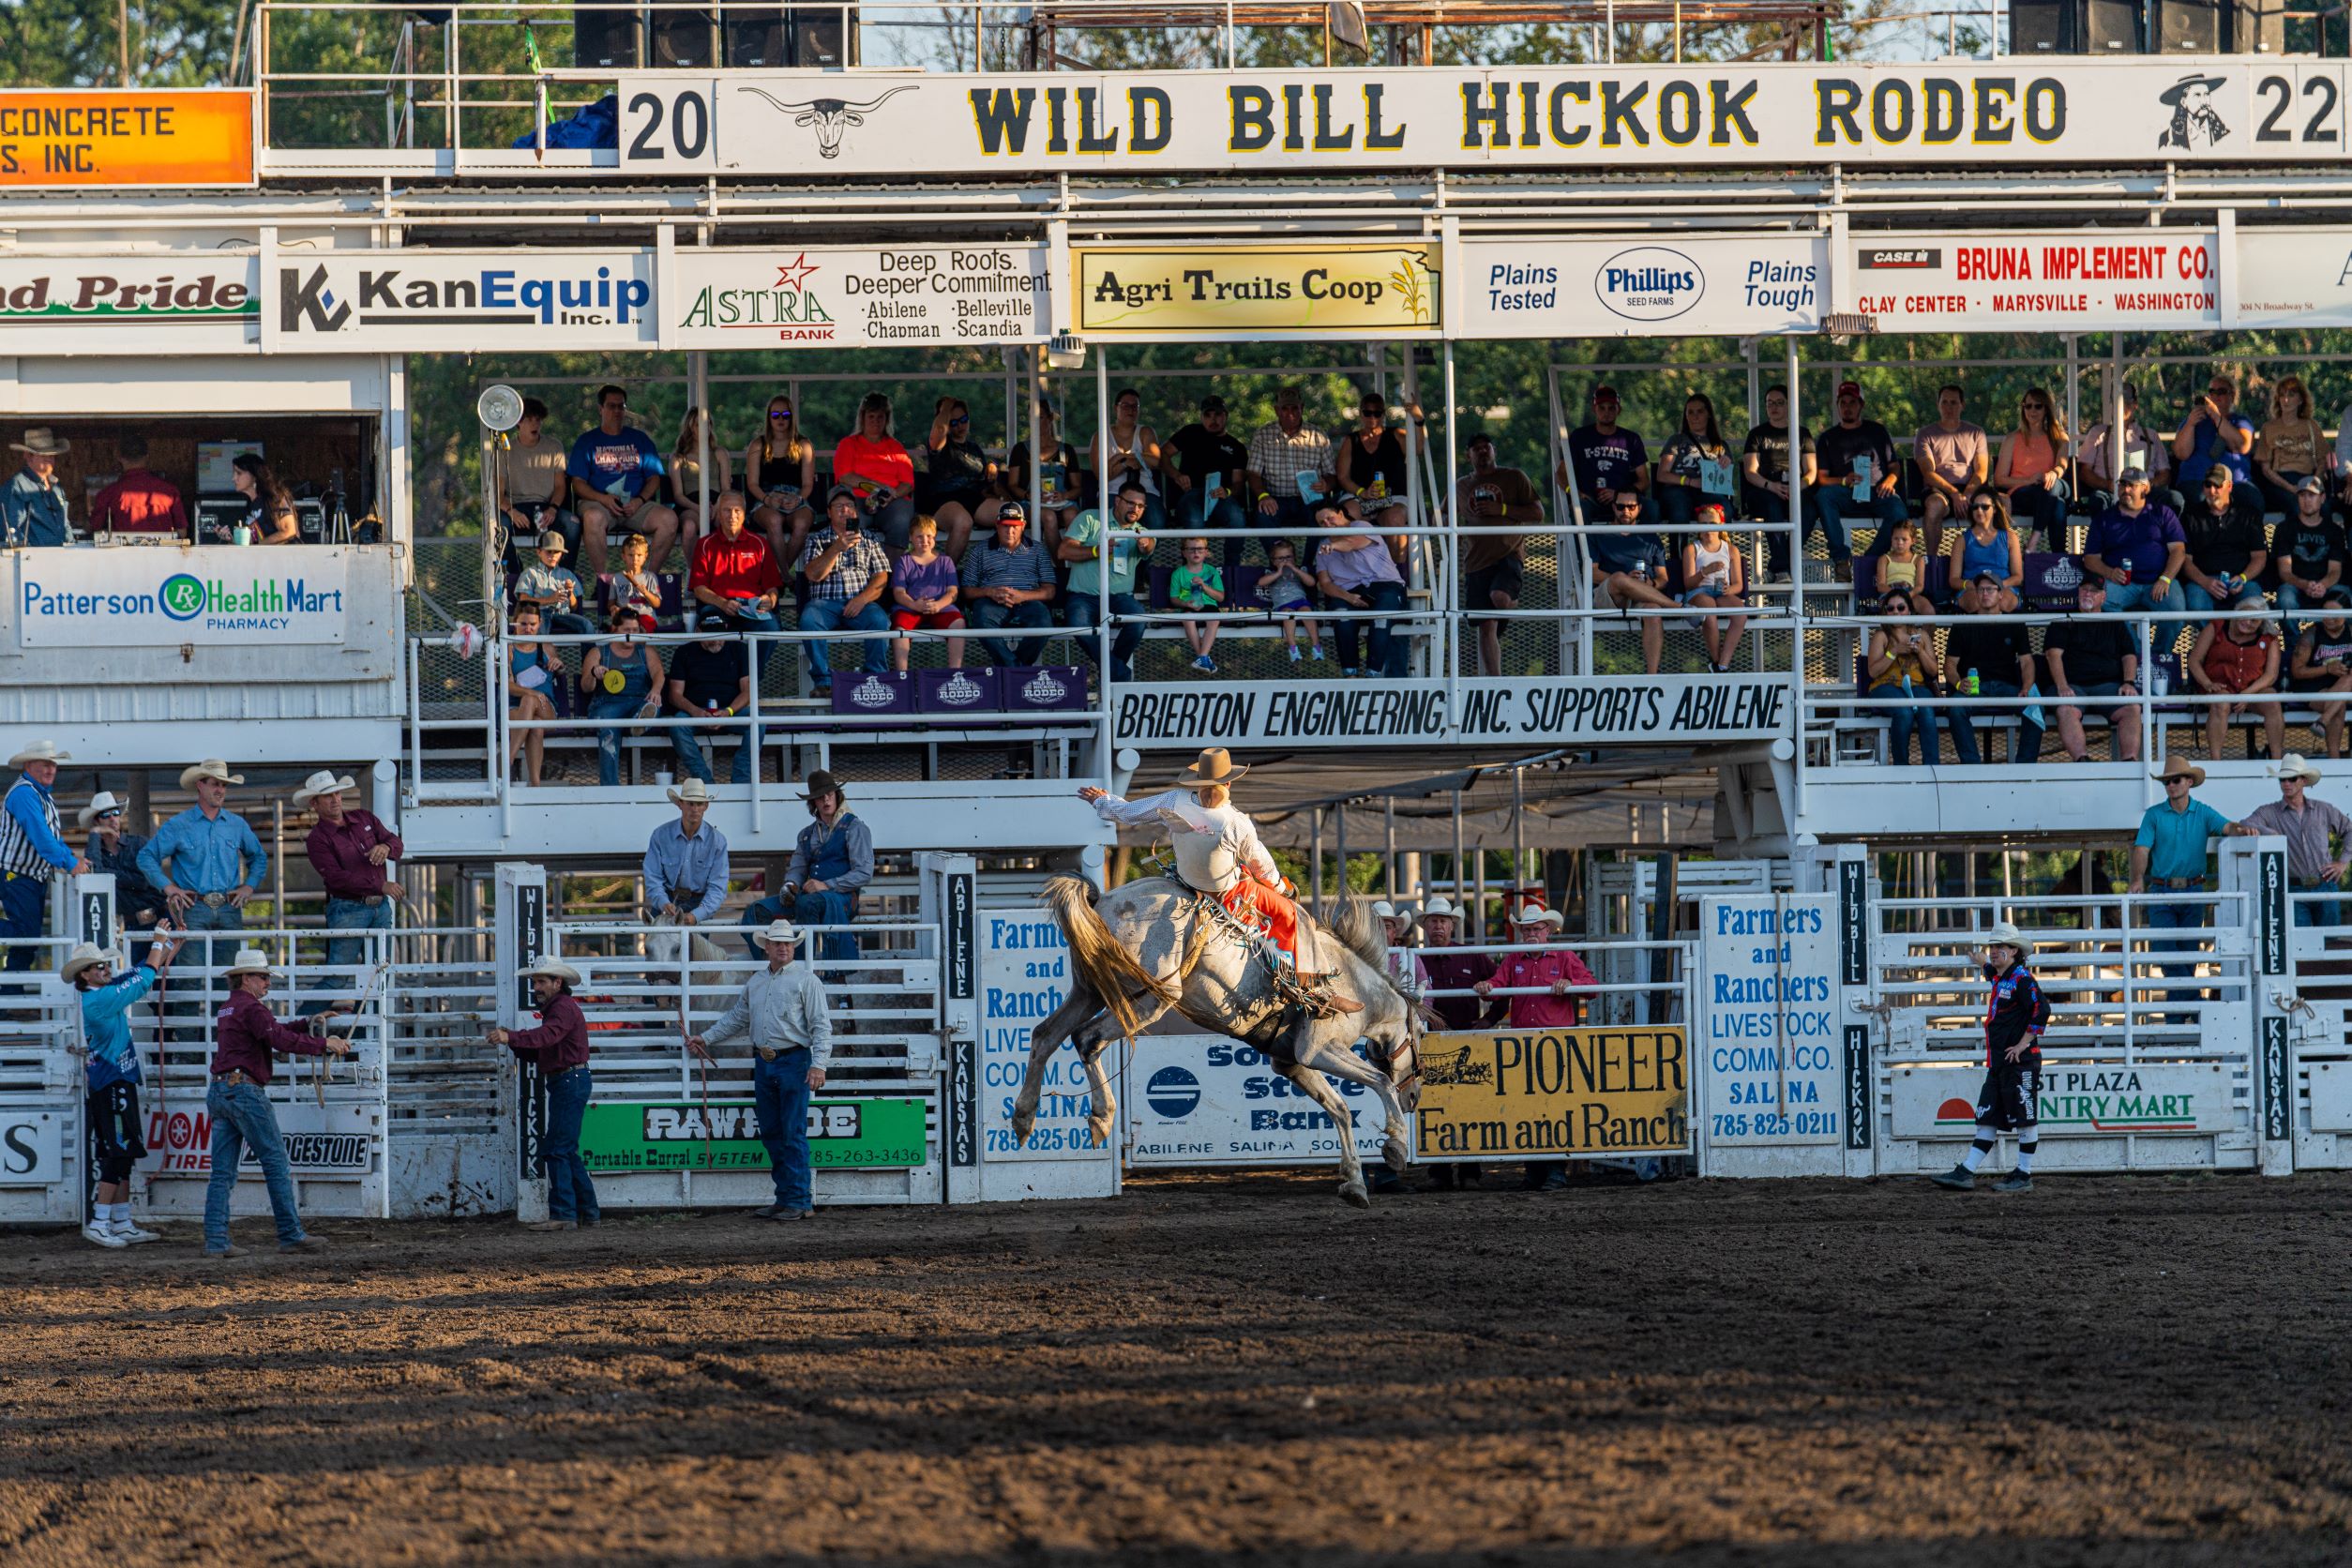 Wild Bill Hickok Rodeo, Abilene KS Experience the Wild West Visit